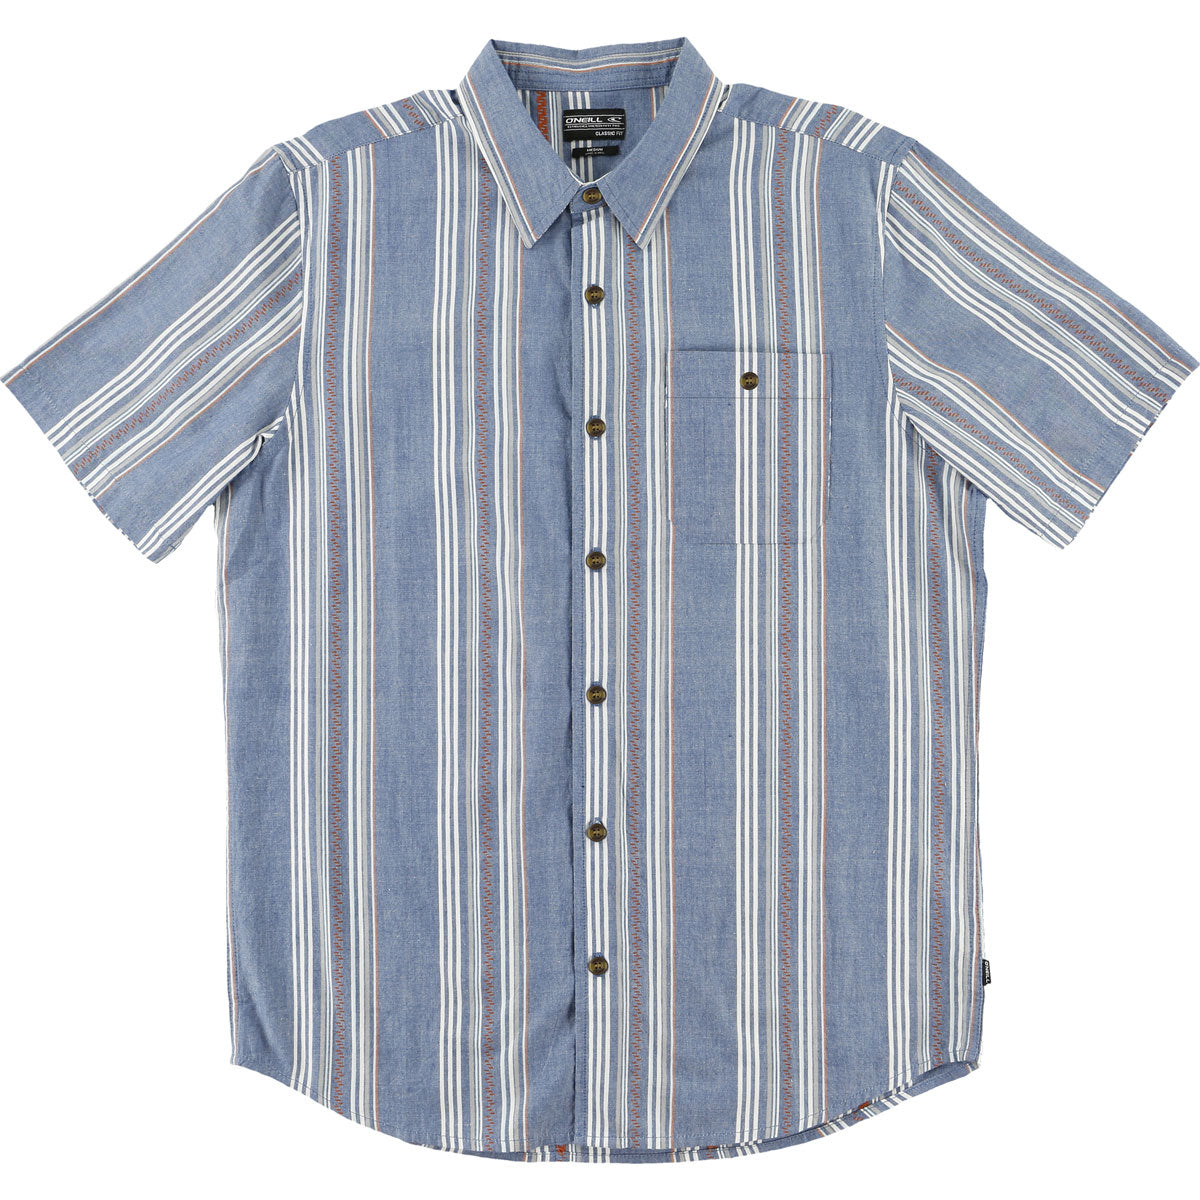 O'Neill Gilmour Men's Button Up Short-Sleeve Shirts - Blue